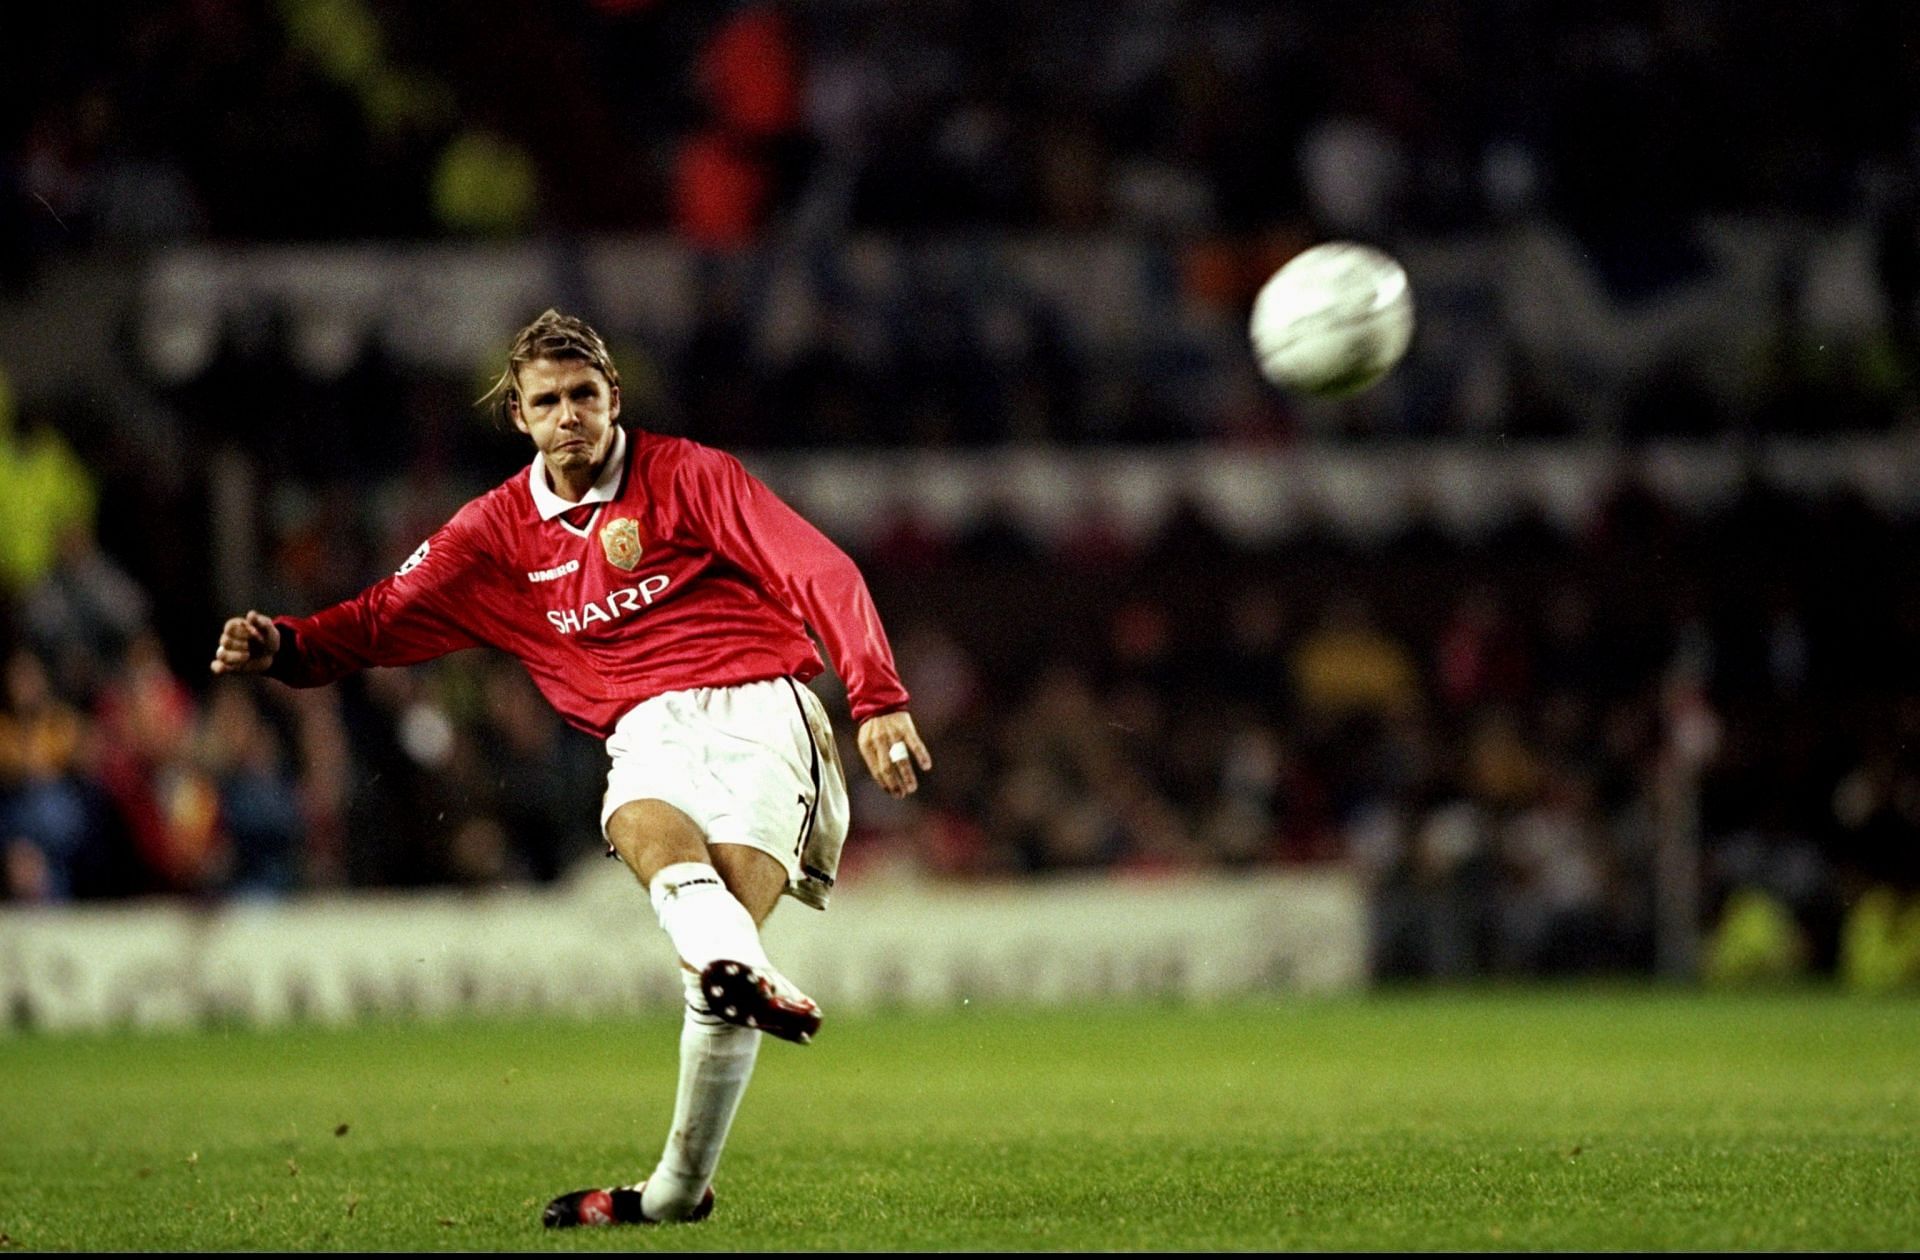 David Beckham of Manchester Utd (Credit: Michael Steele /Allsport)